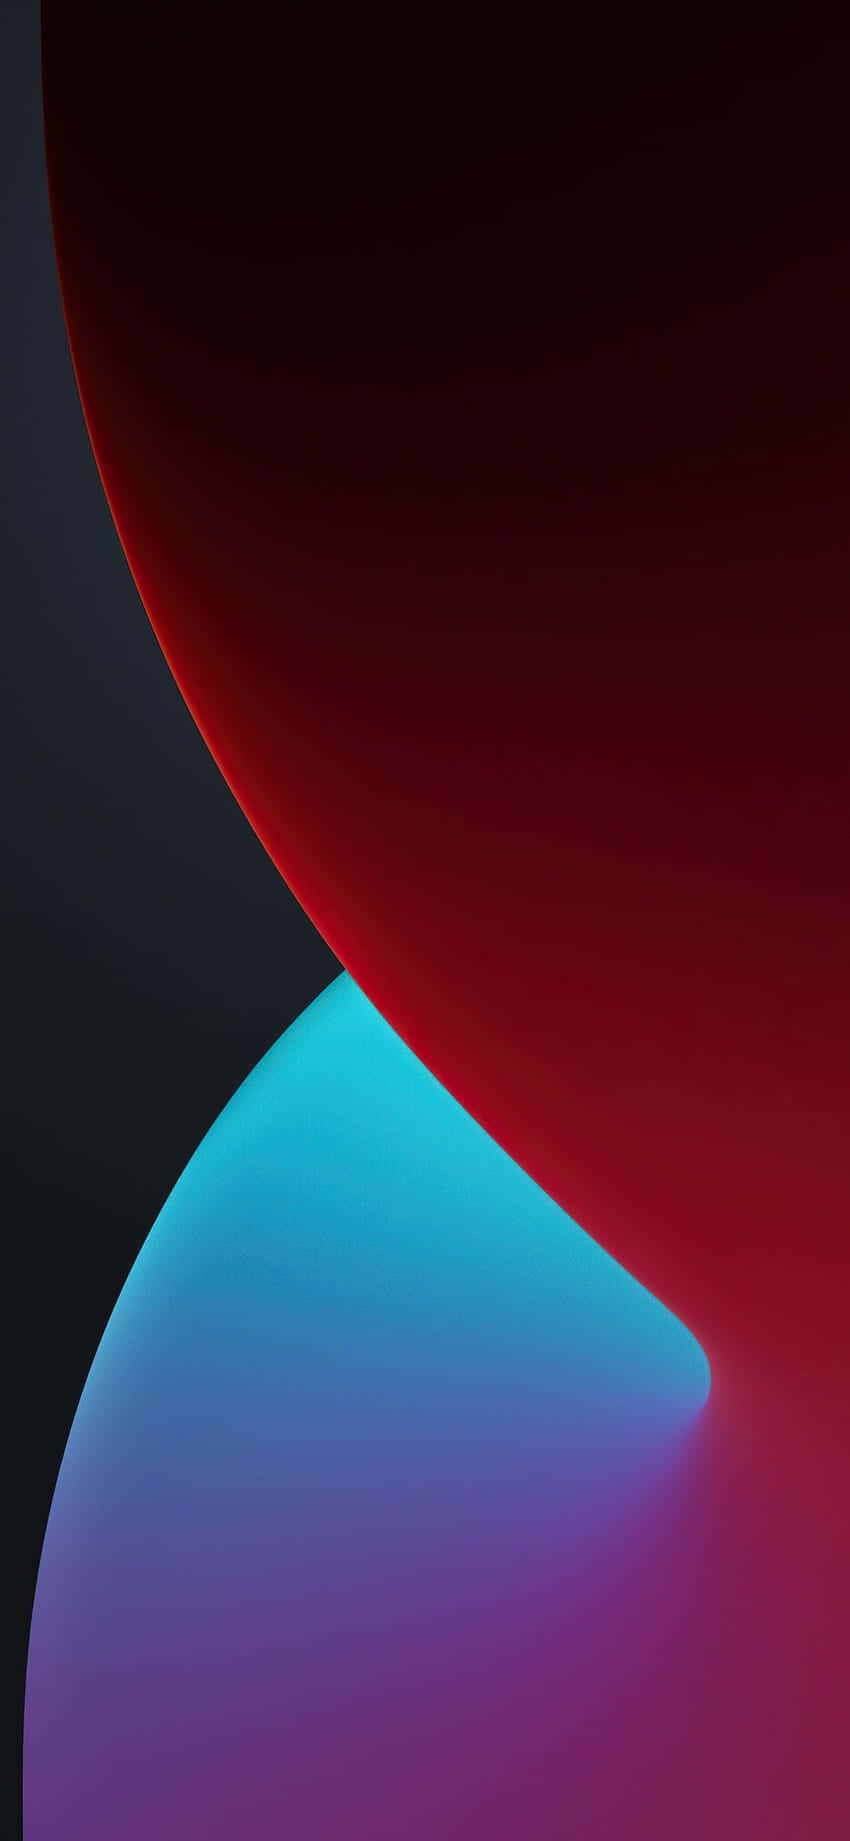 Applesflaggschiff Iphone 2020 - Das Ultimative Smartphone In Sachen Technologie. Wallpaper